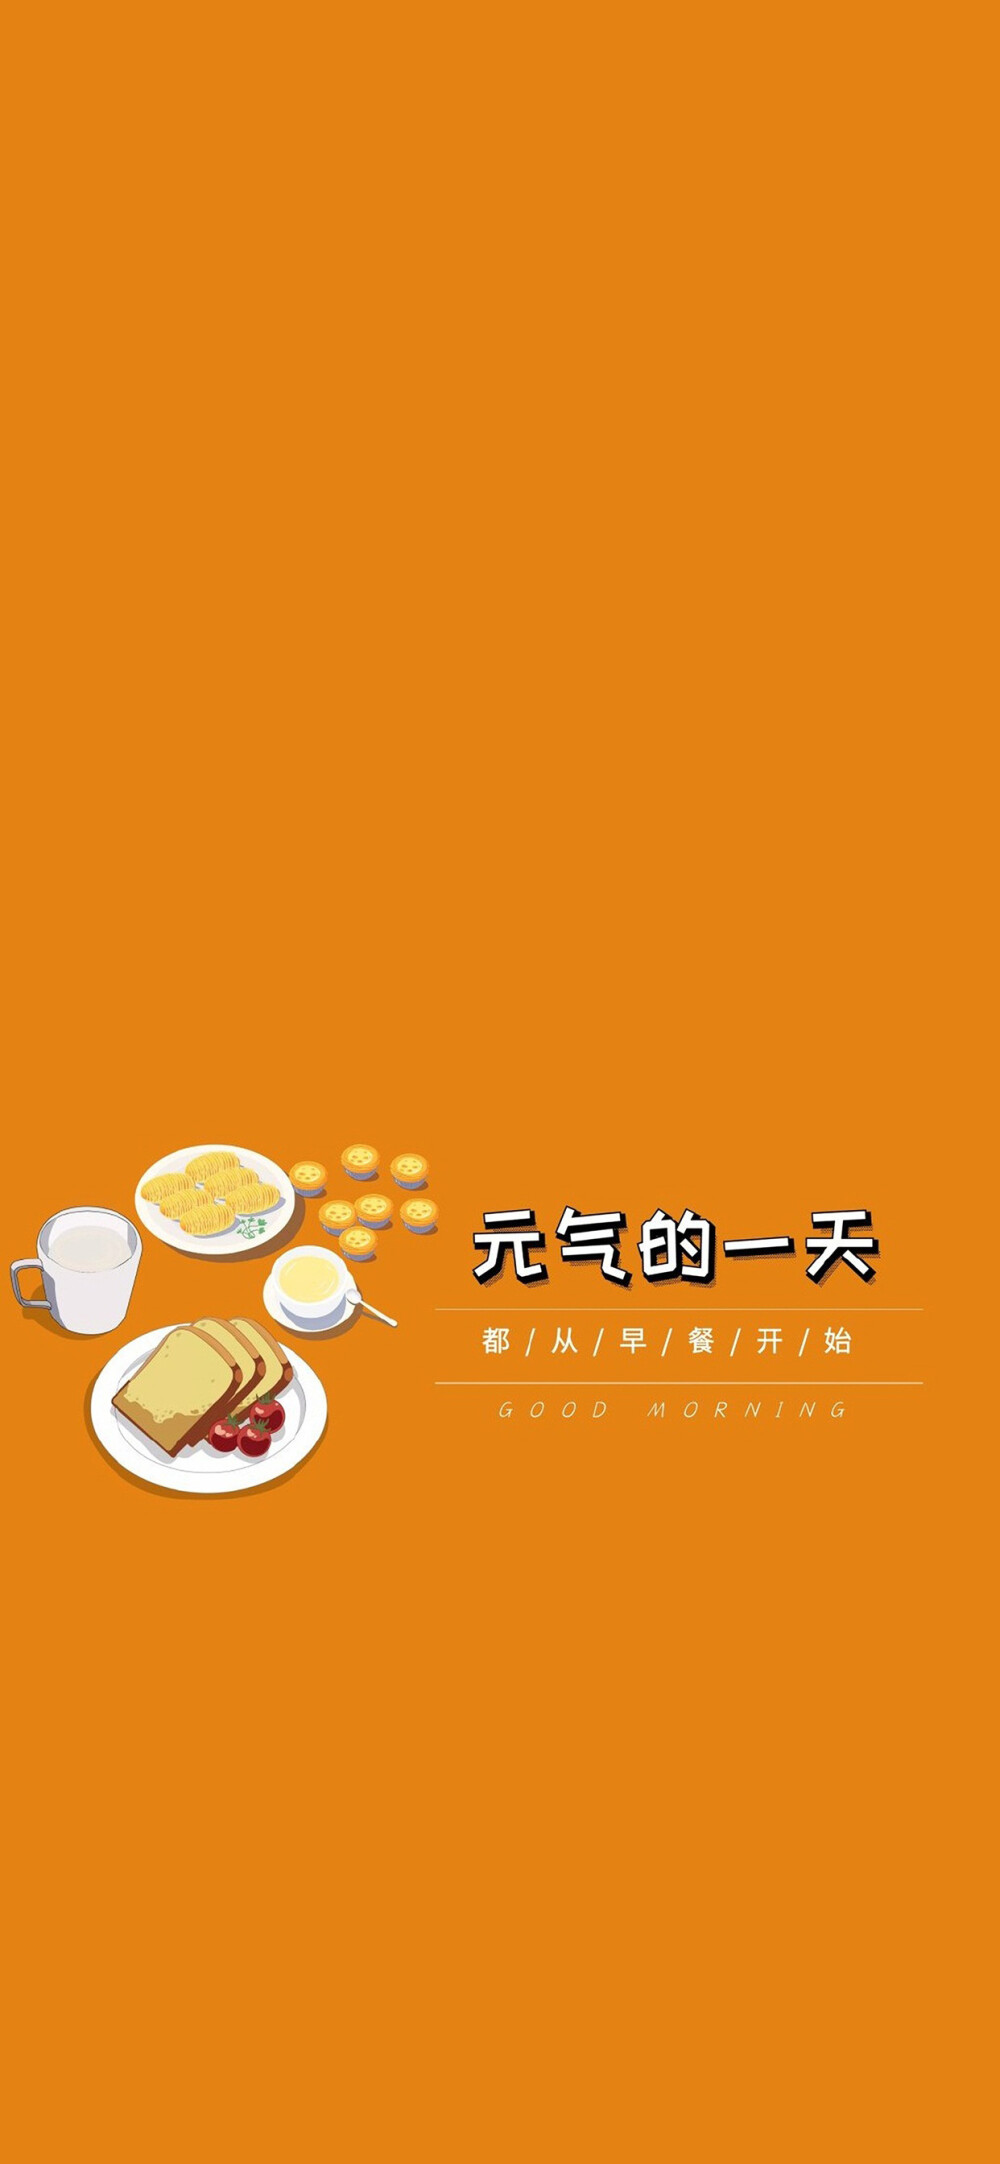 wallpaper♡
橙色系